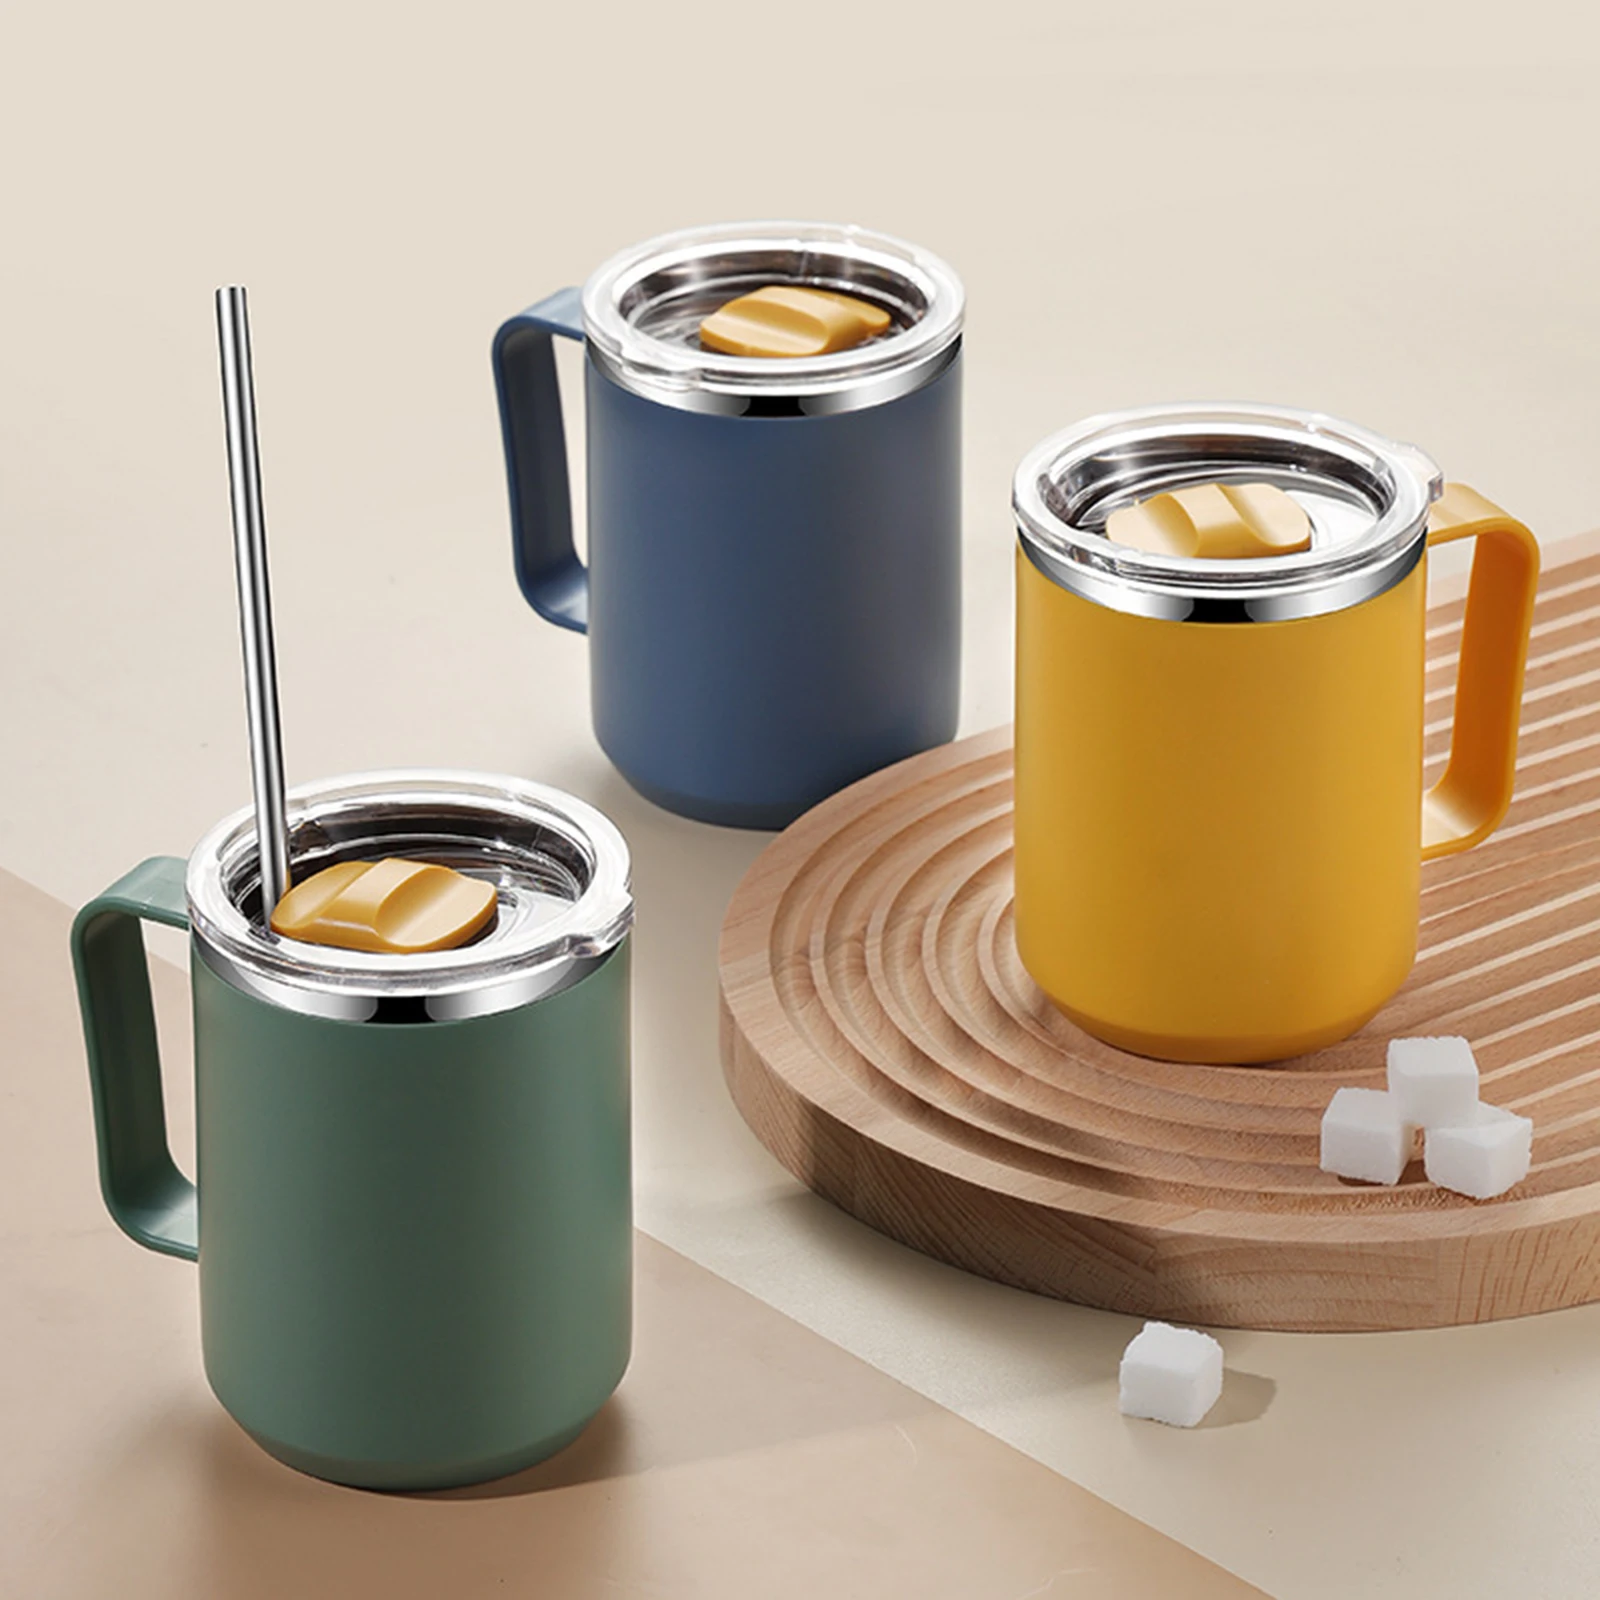 https://ae01.alicdn.com/kf/Se0126f14d0284b86ad511915151afc2fA/450ml-Coffee-Mug-304-Stainless-Steel-Double-layer-Tea-Drinks-Mug-with-Handle-and-Lid-Leak.jpg